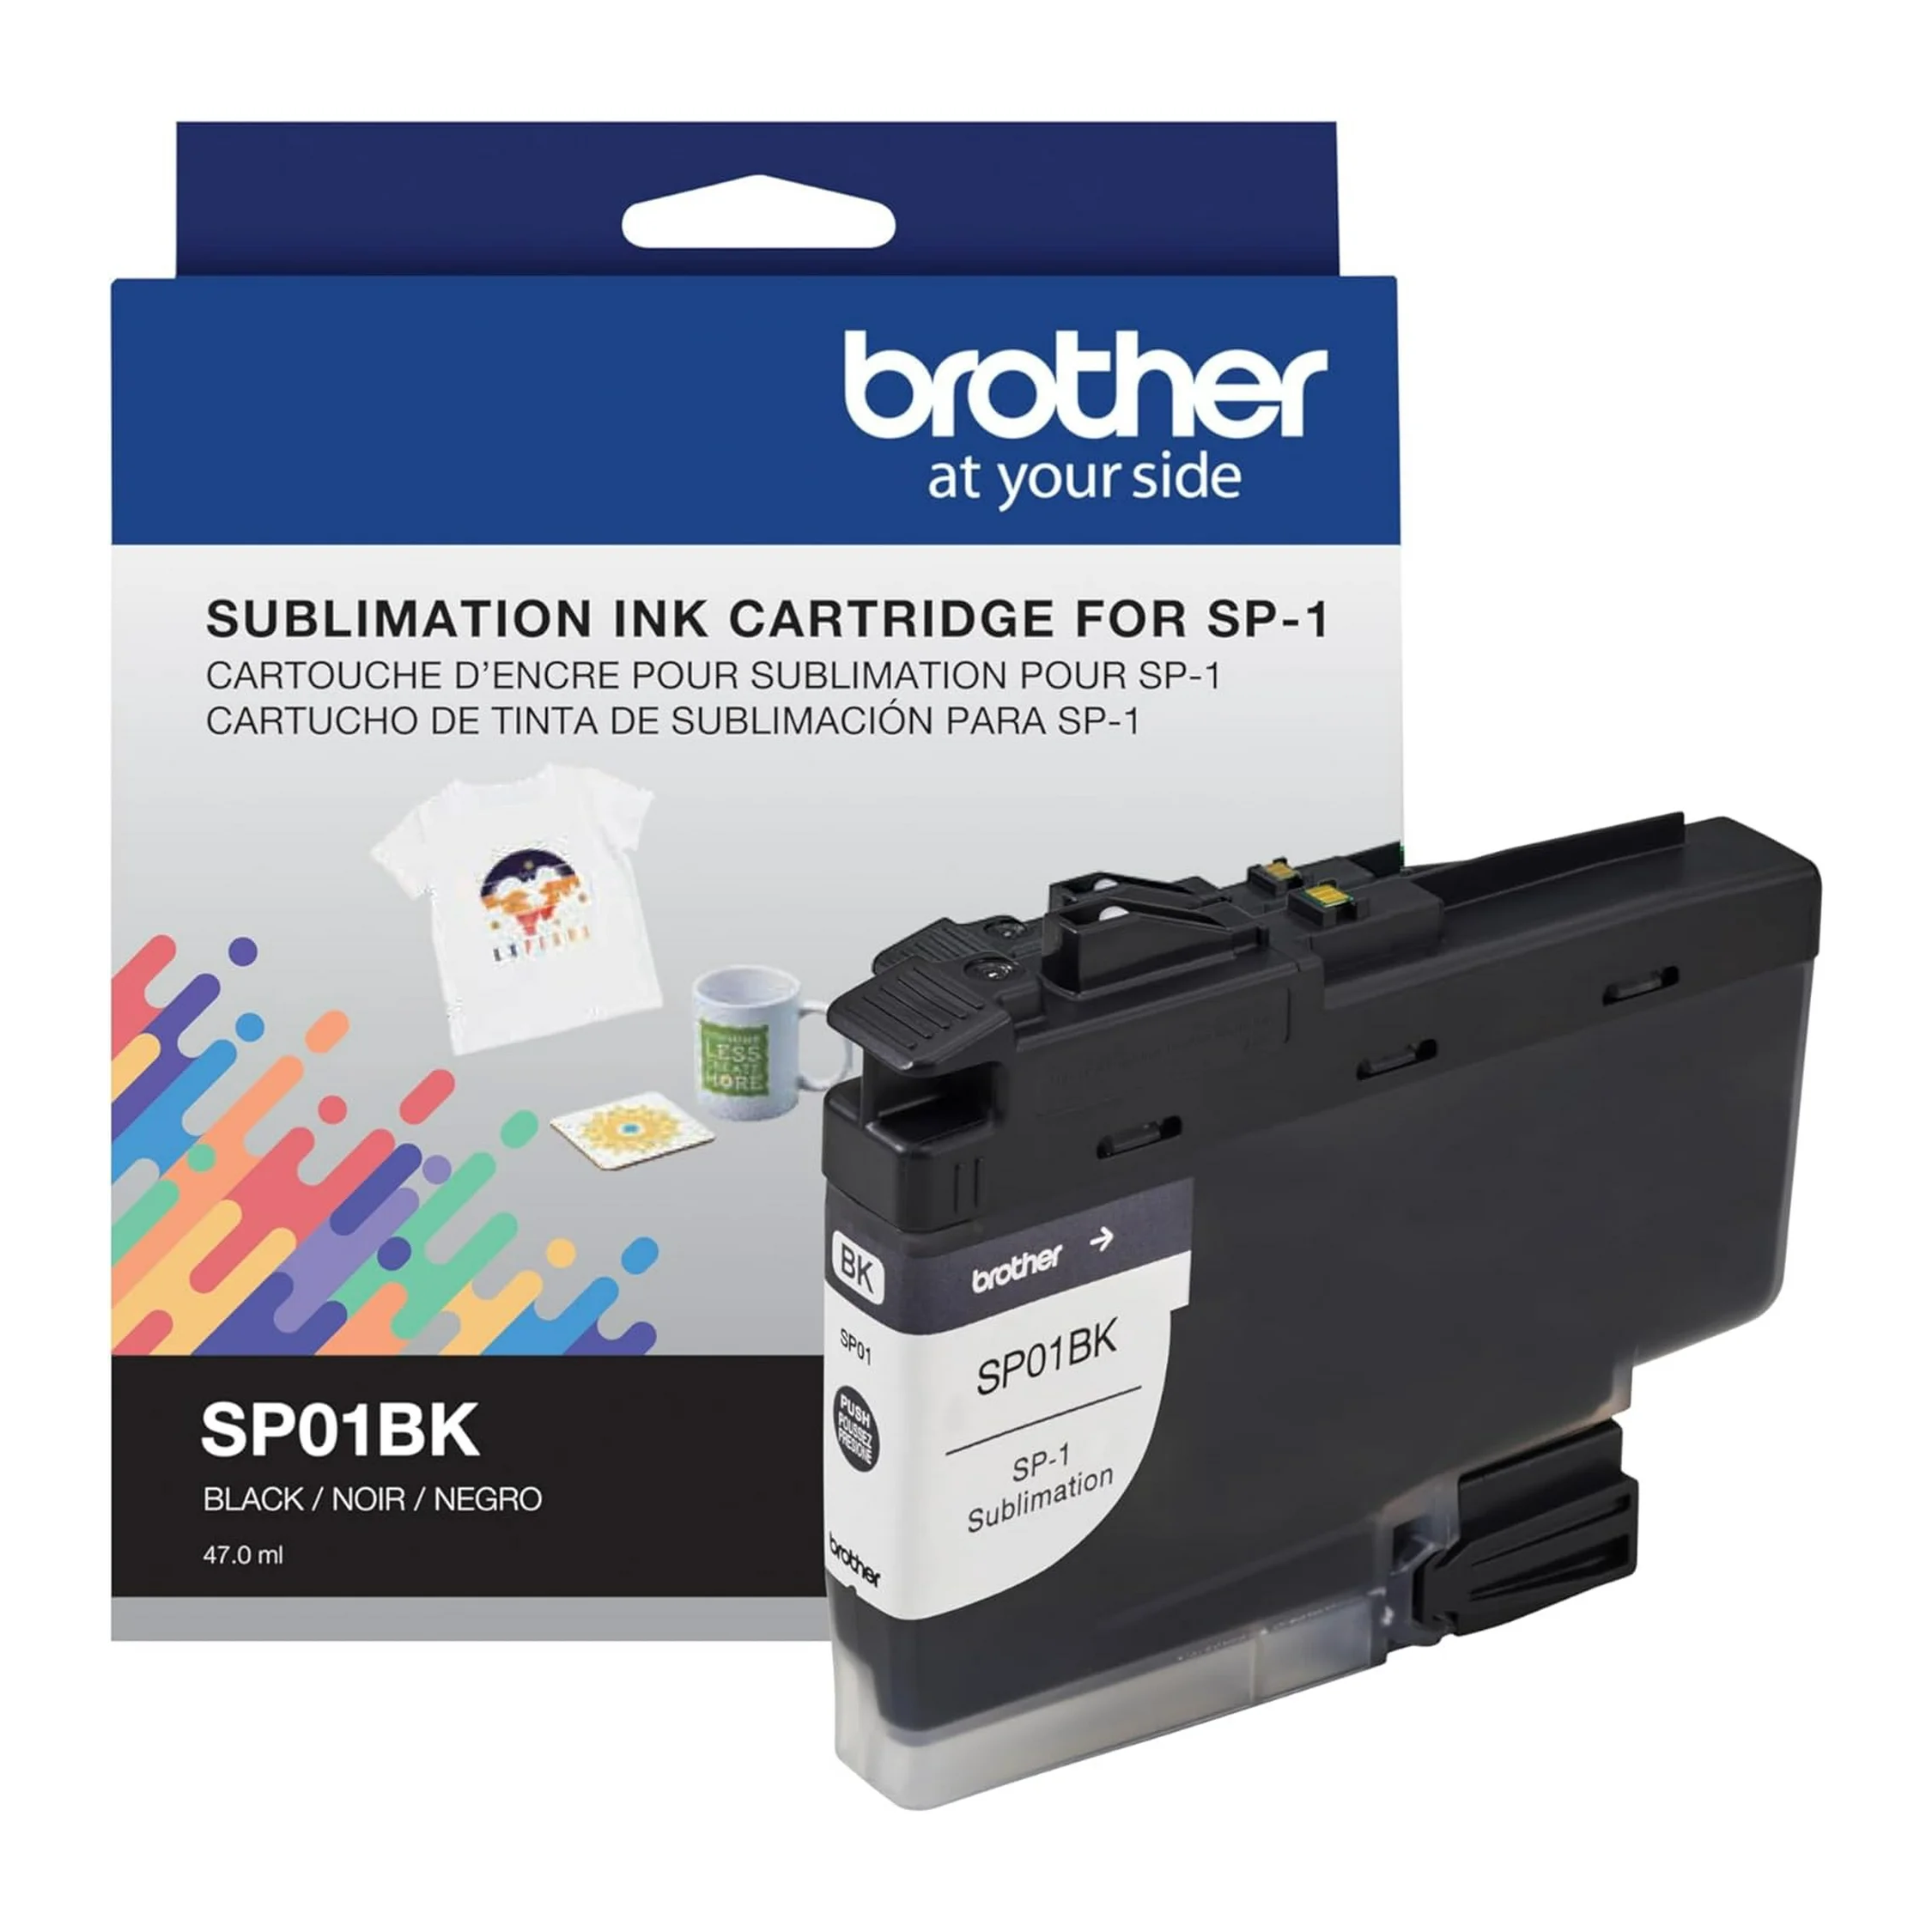 Brother Sublimation Ink Cartridges SP01BK for Sale at World Weidner